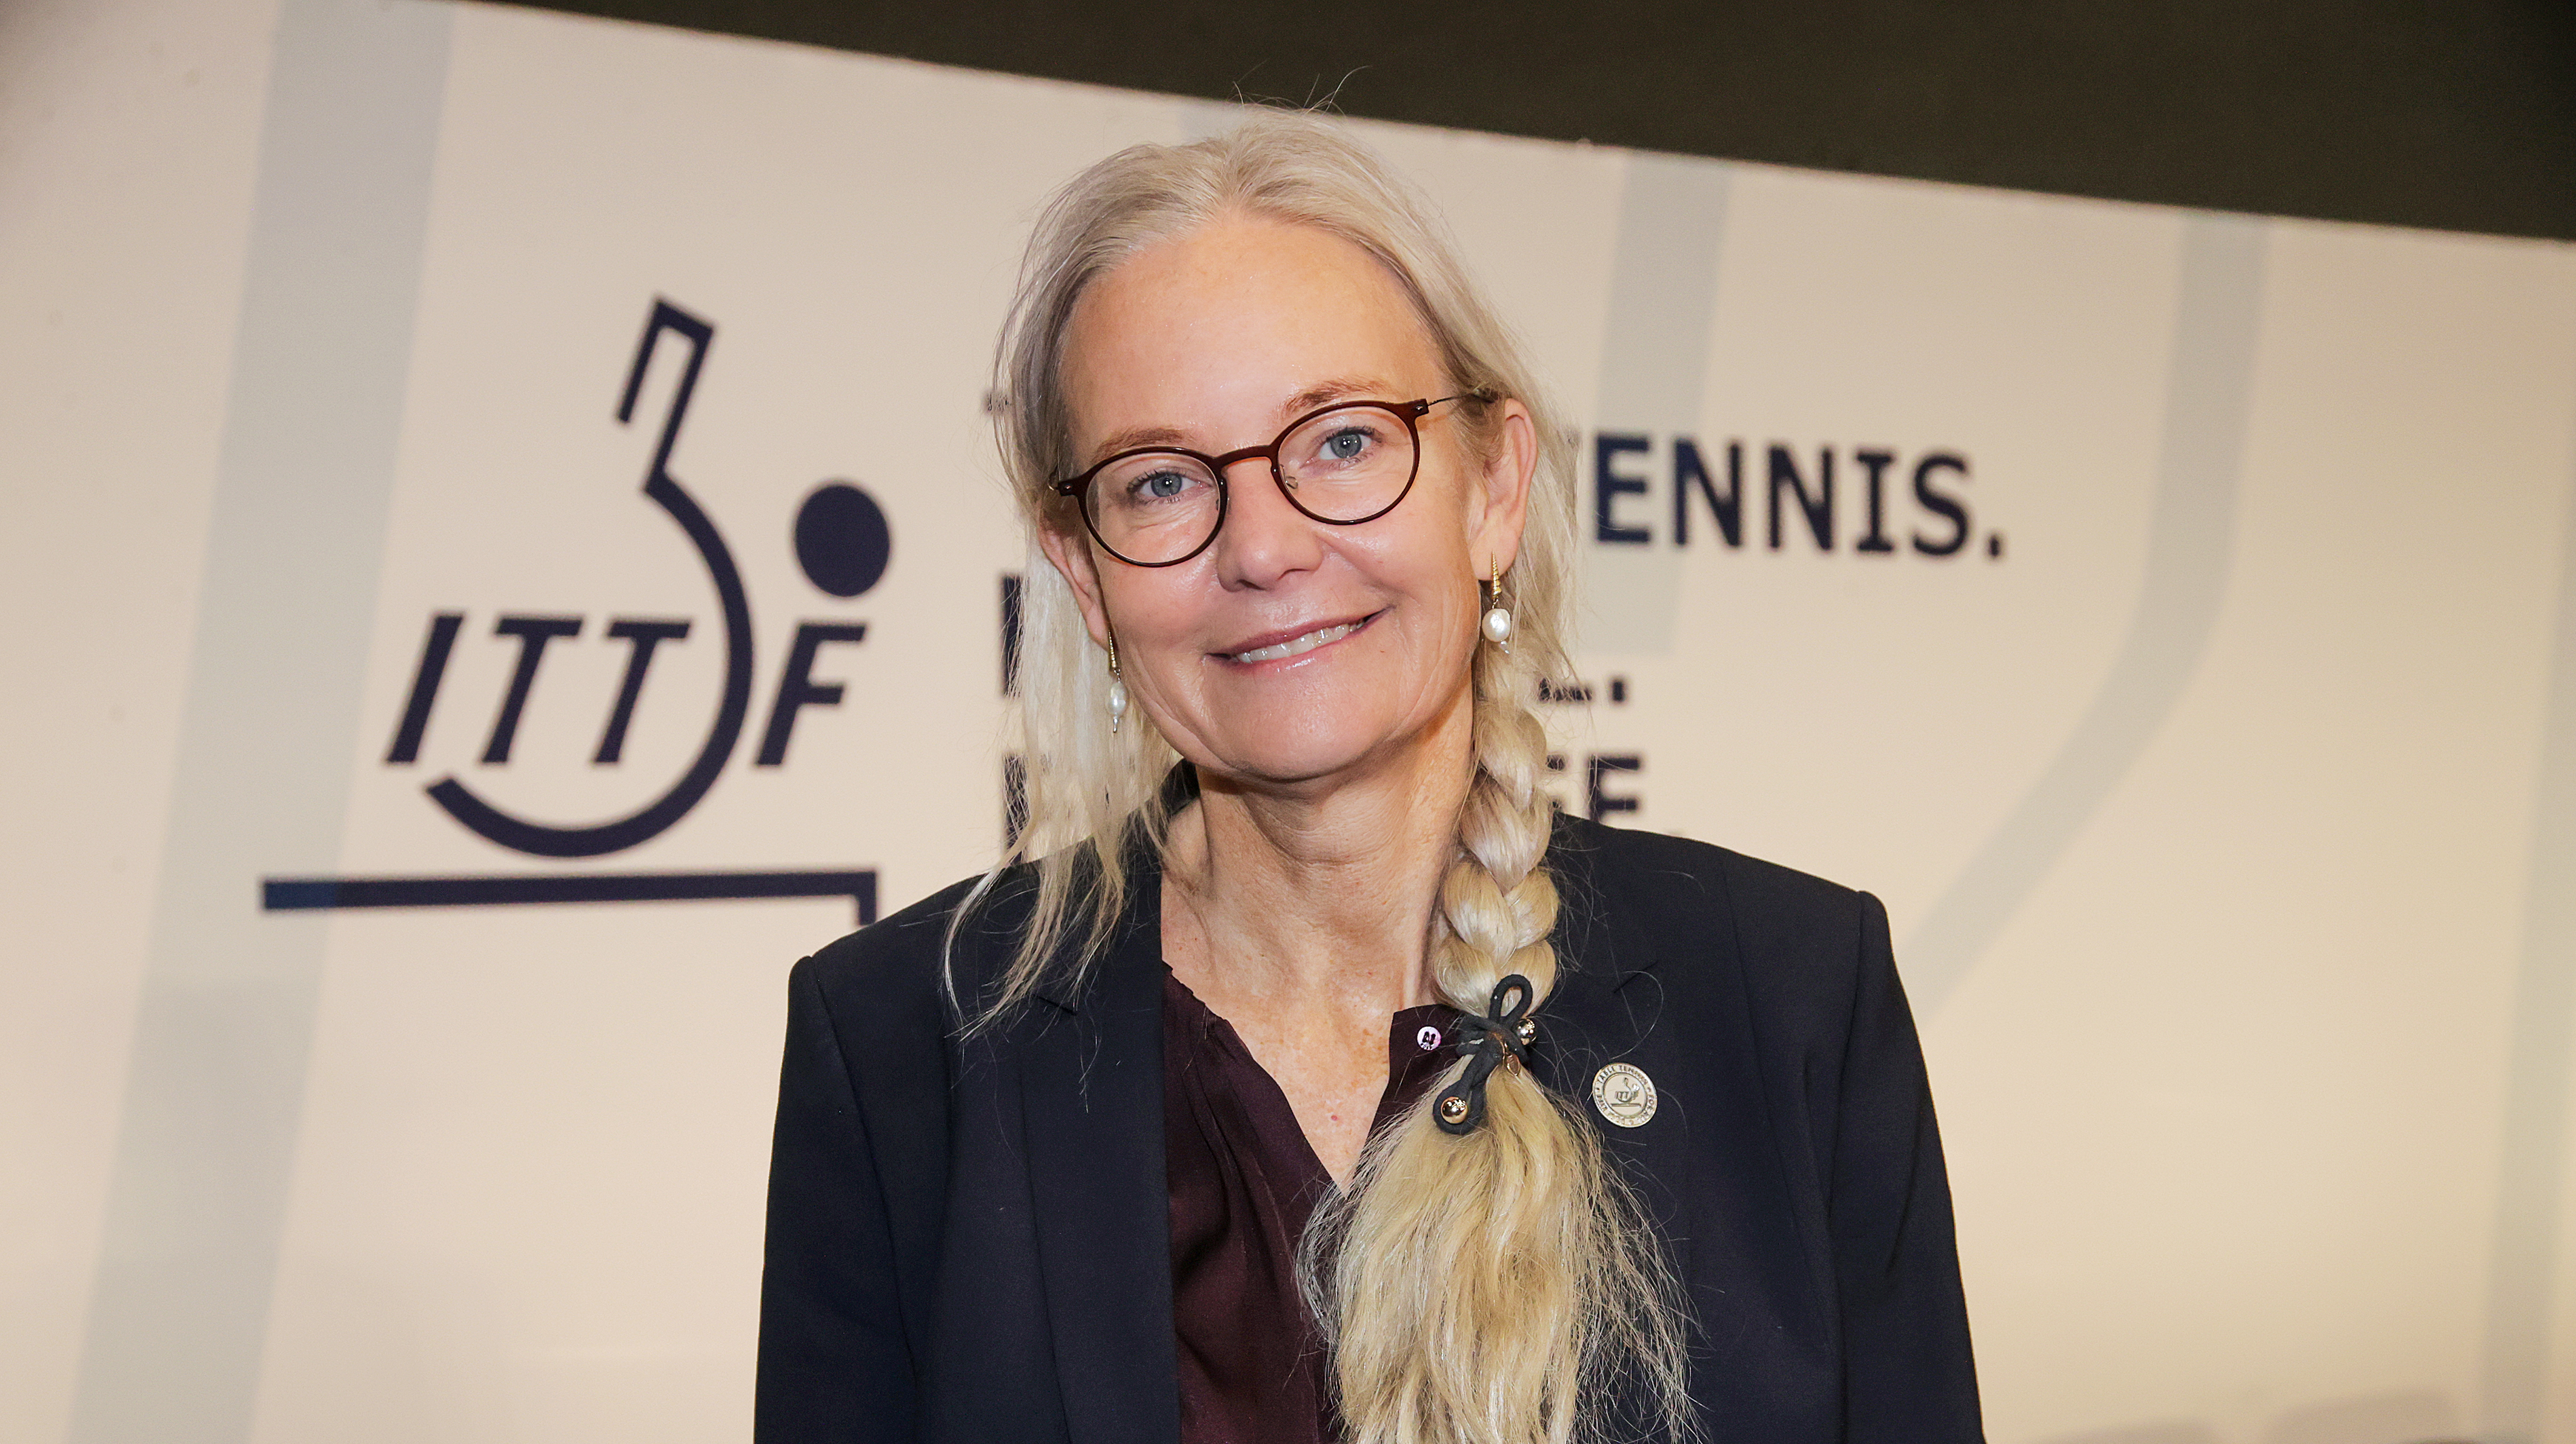 Petra Sörling eletta nuova presidente della ITTF